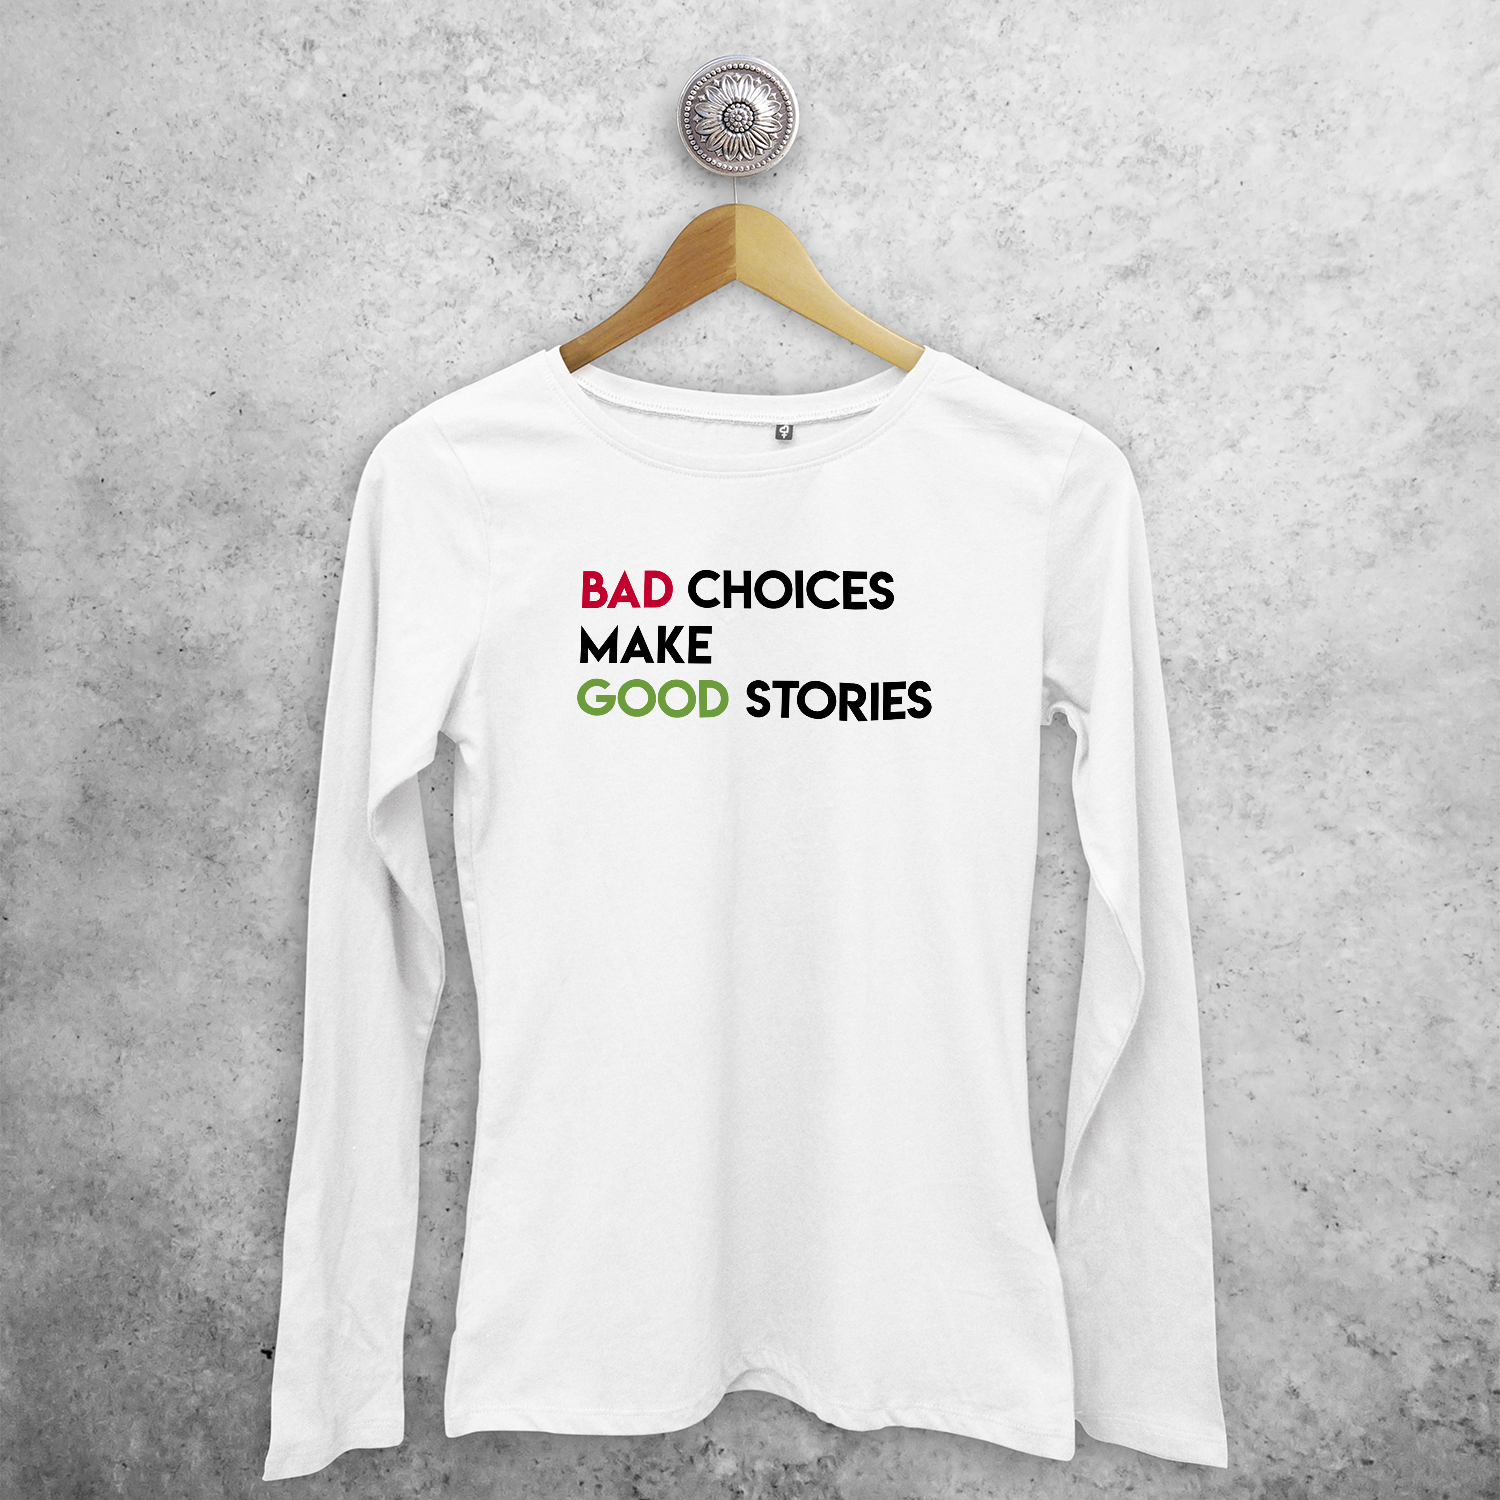 'Bad choices make good stories' adult longsleeve shirt